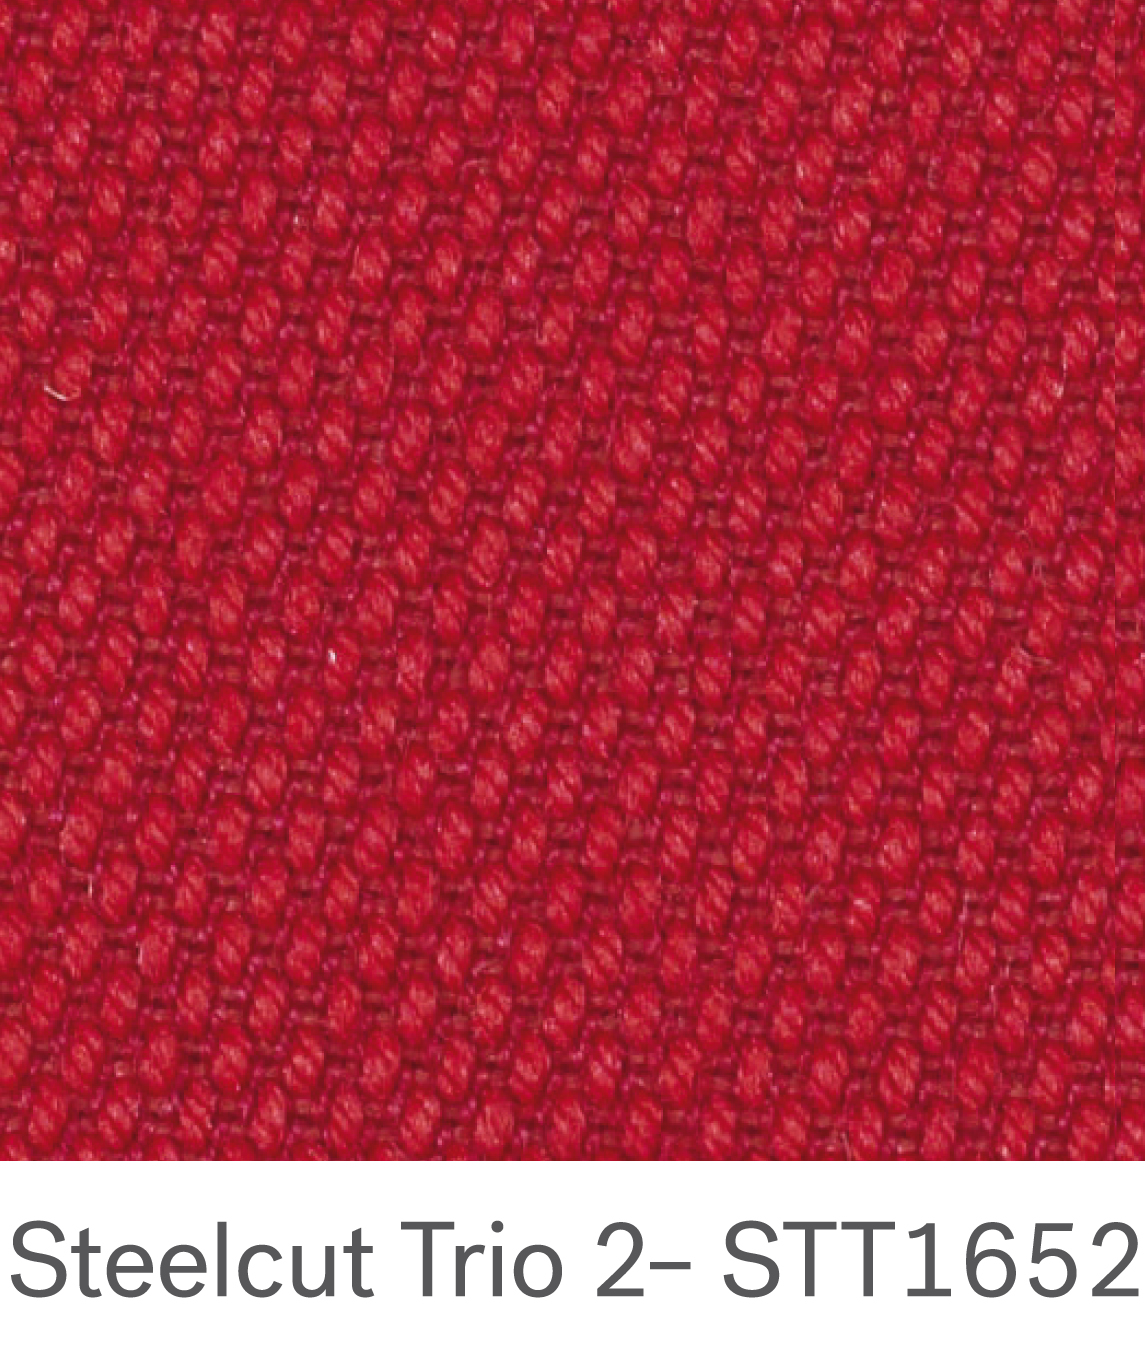 Steelcut Trio (Kvadrat) – STT1652